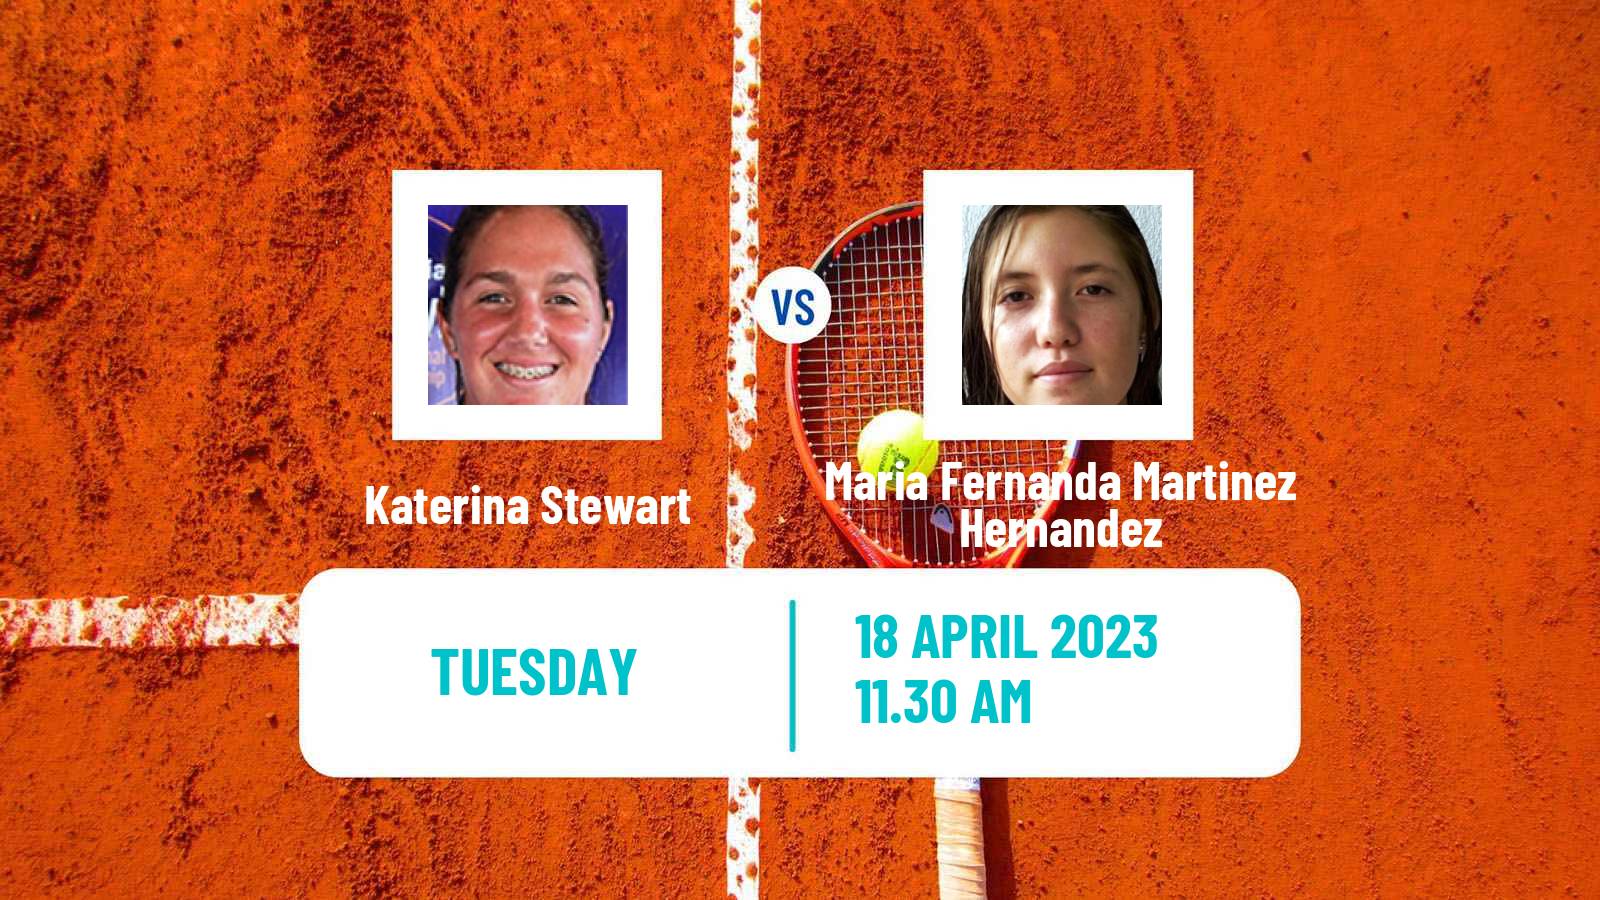 Tennis ITF Tournaments Katerina Stewart - Maria Fernanda Martinez Hernandez